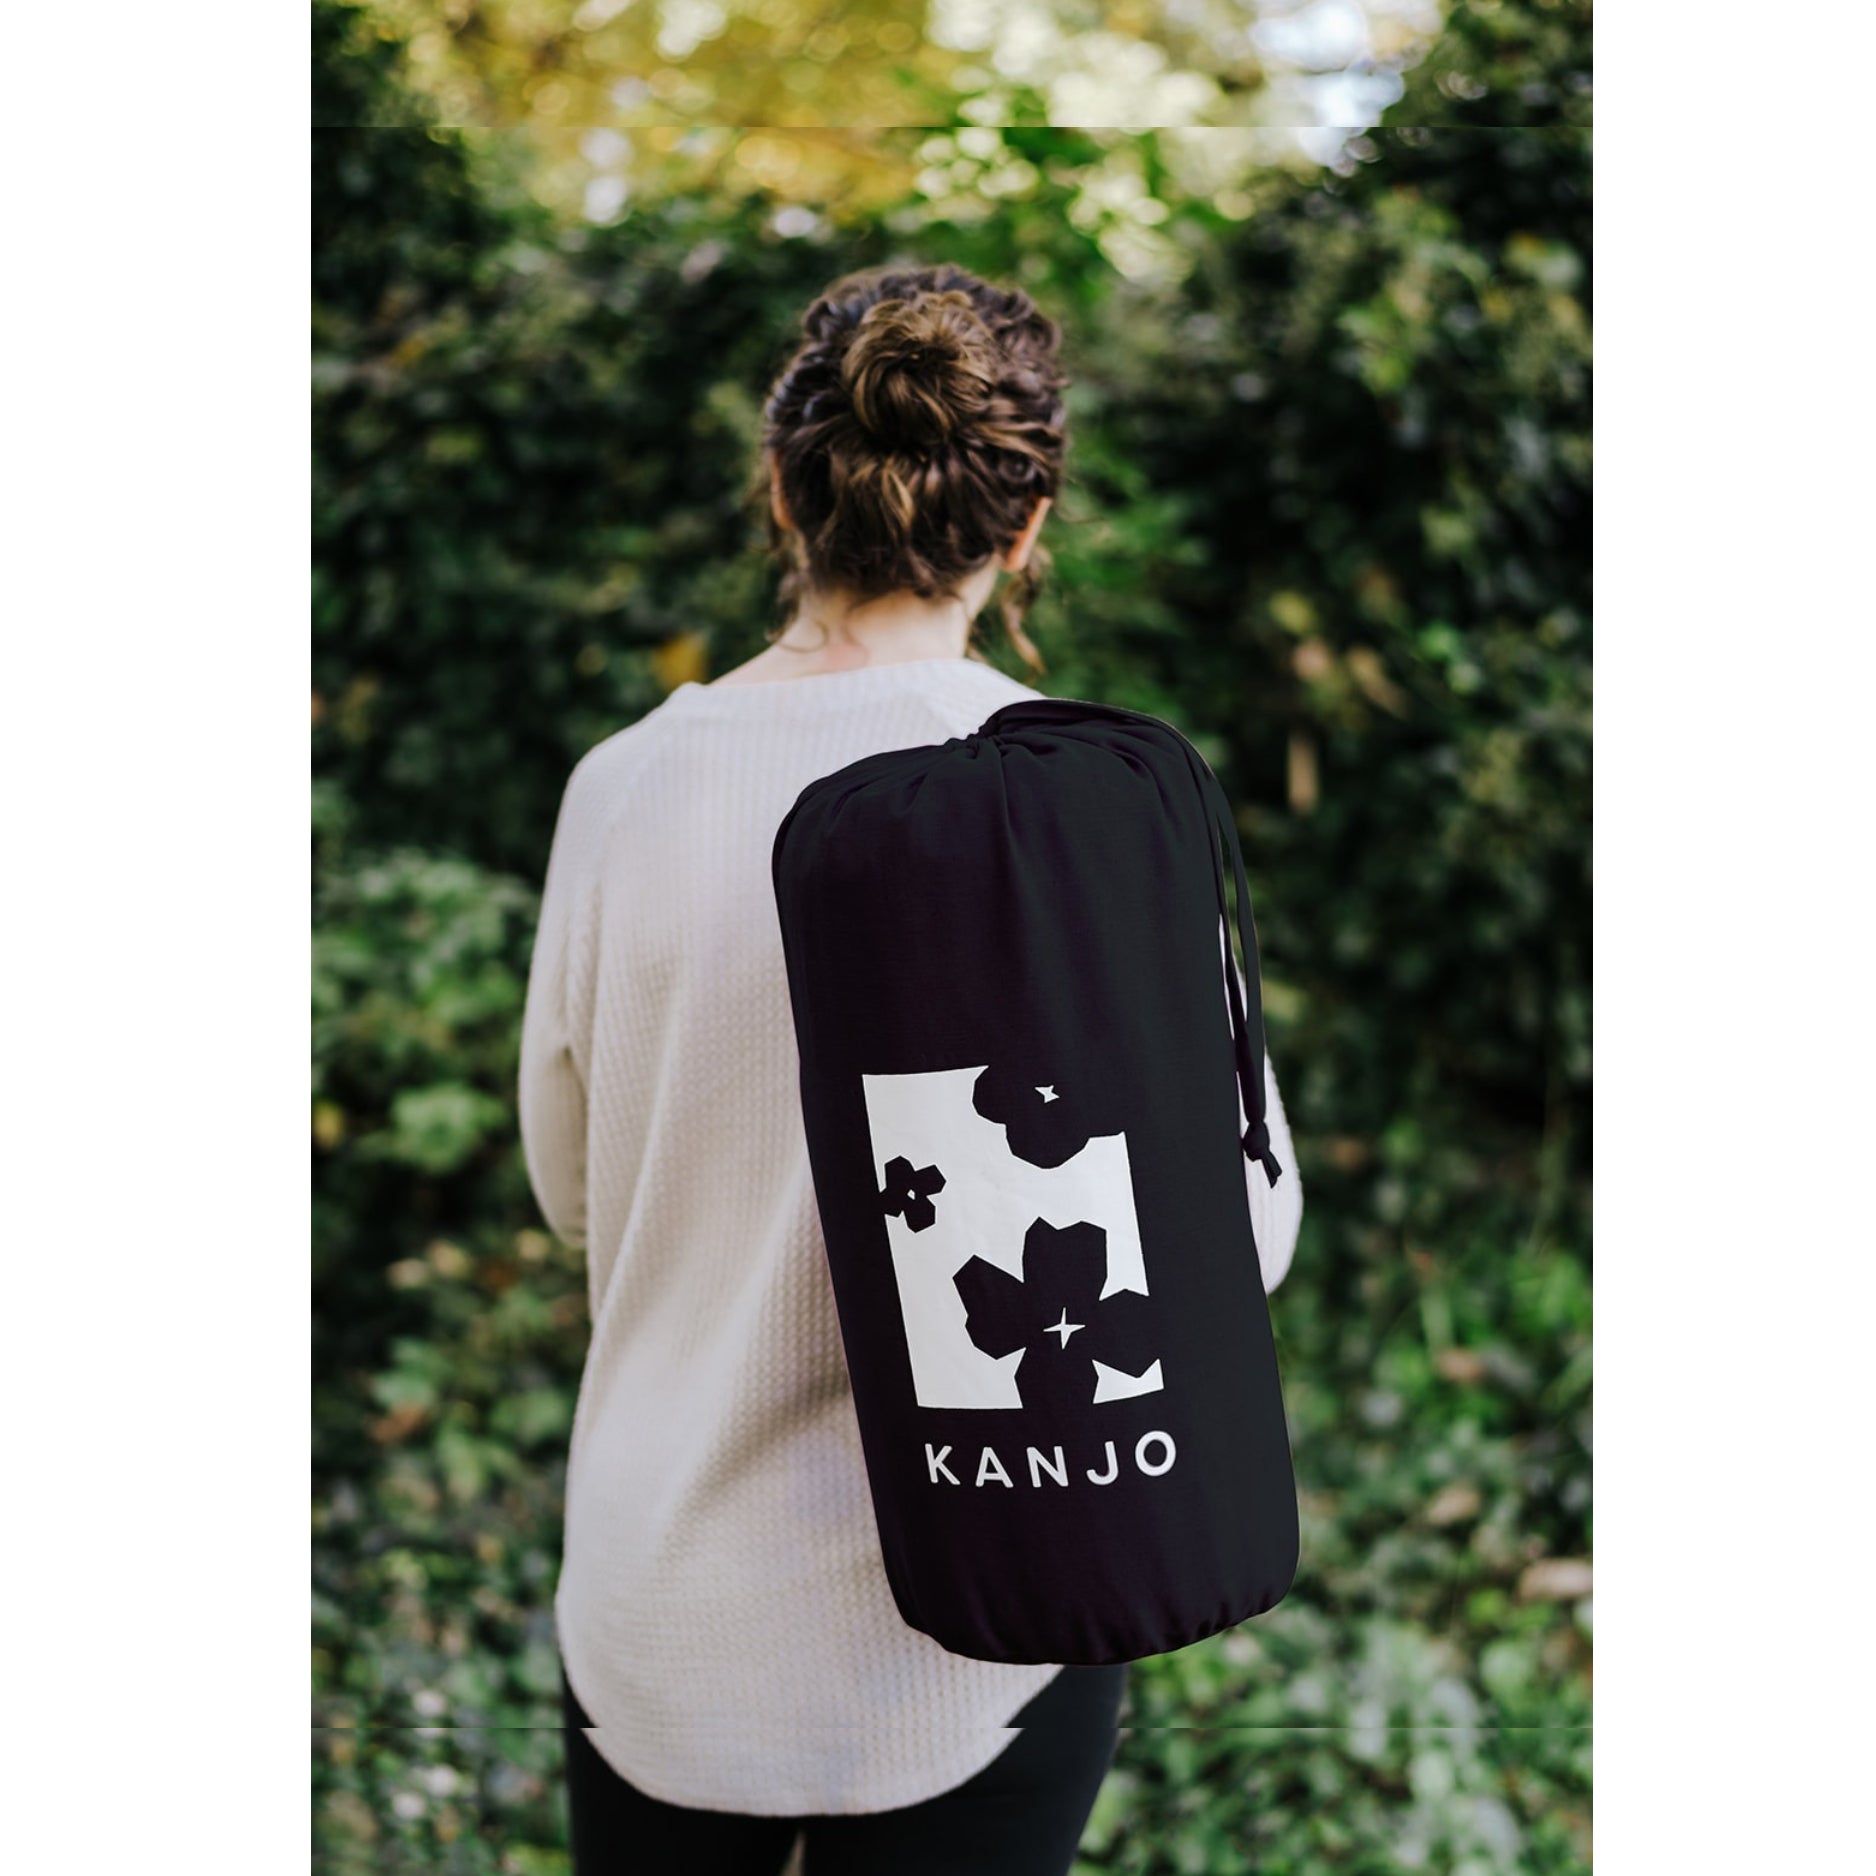 Kanjo Memory Foam Acupressure Mat Set, Onyx with a carry bag